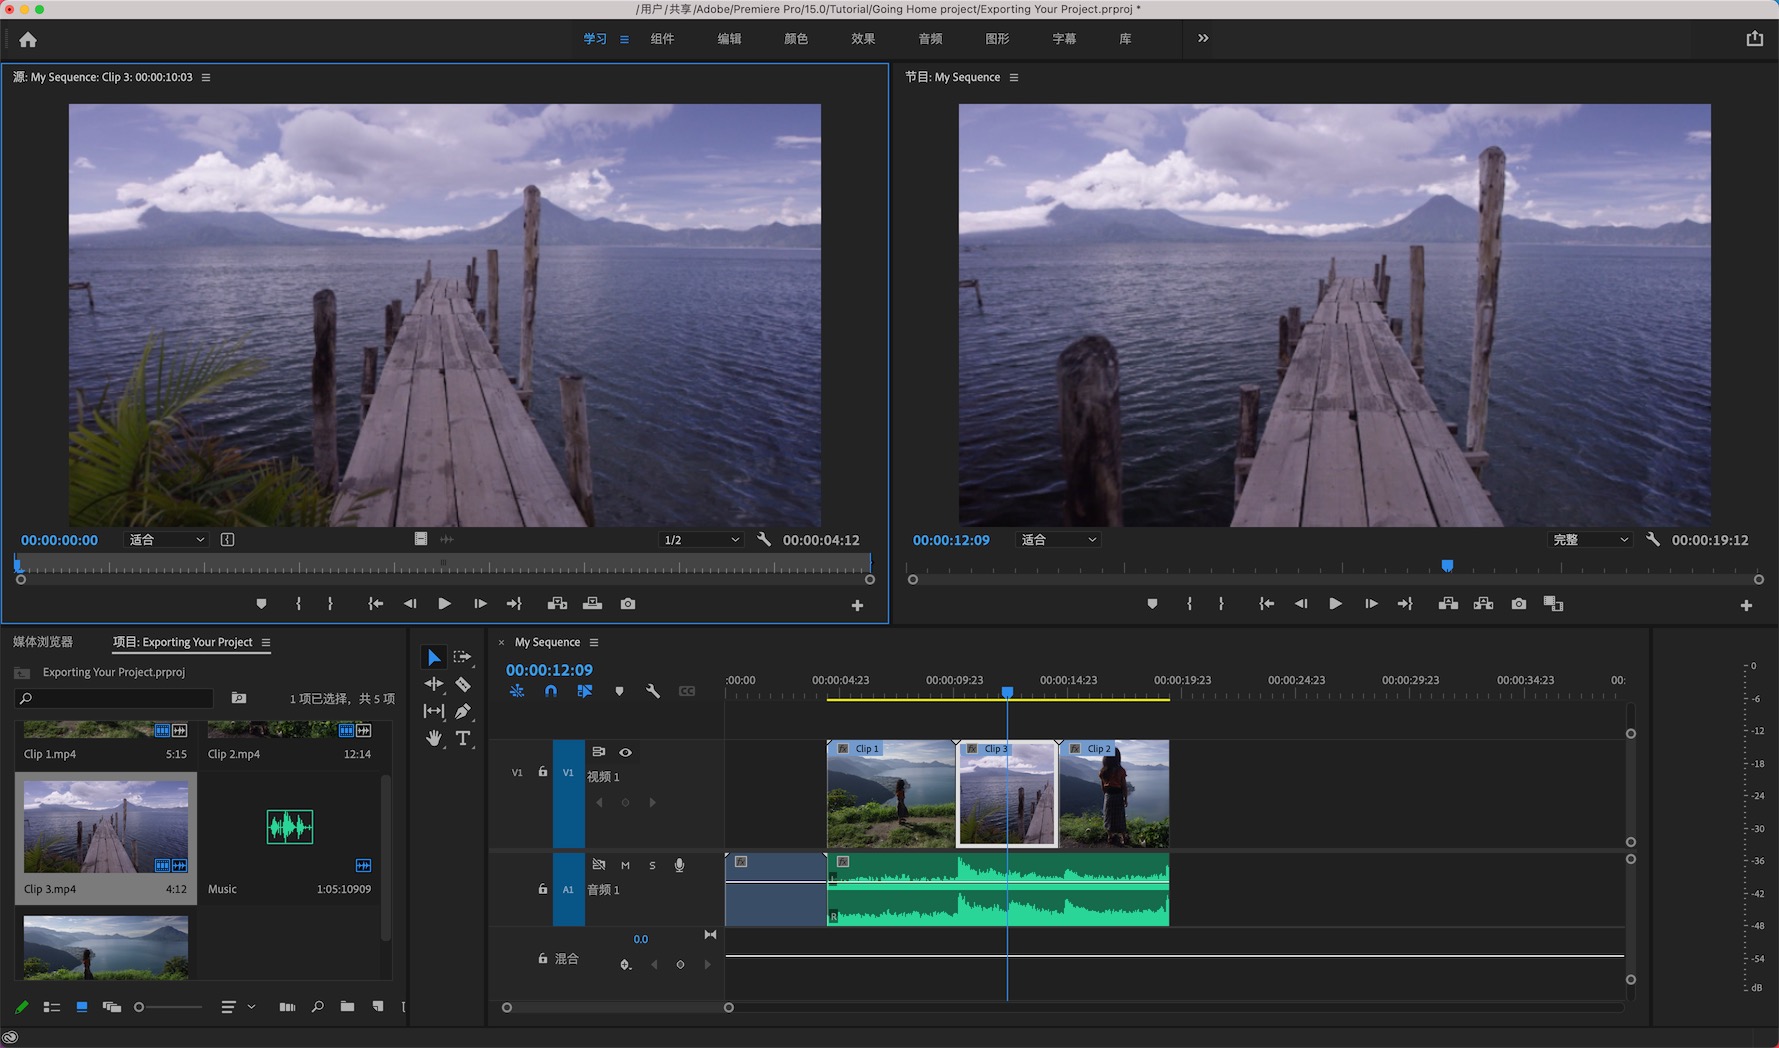 Adobe Premiere Pro 2021 15.4 for Mac|Mac版下载 | PR视频剪辑软件